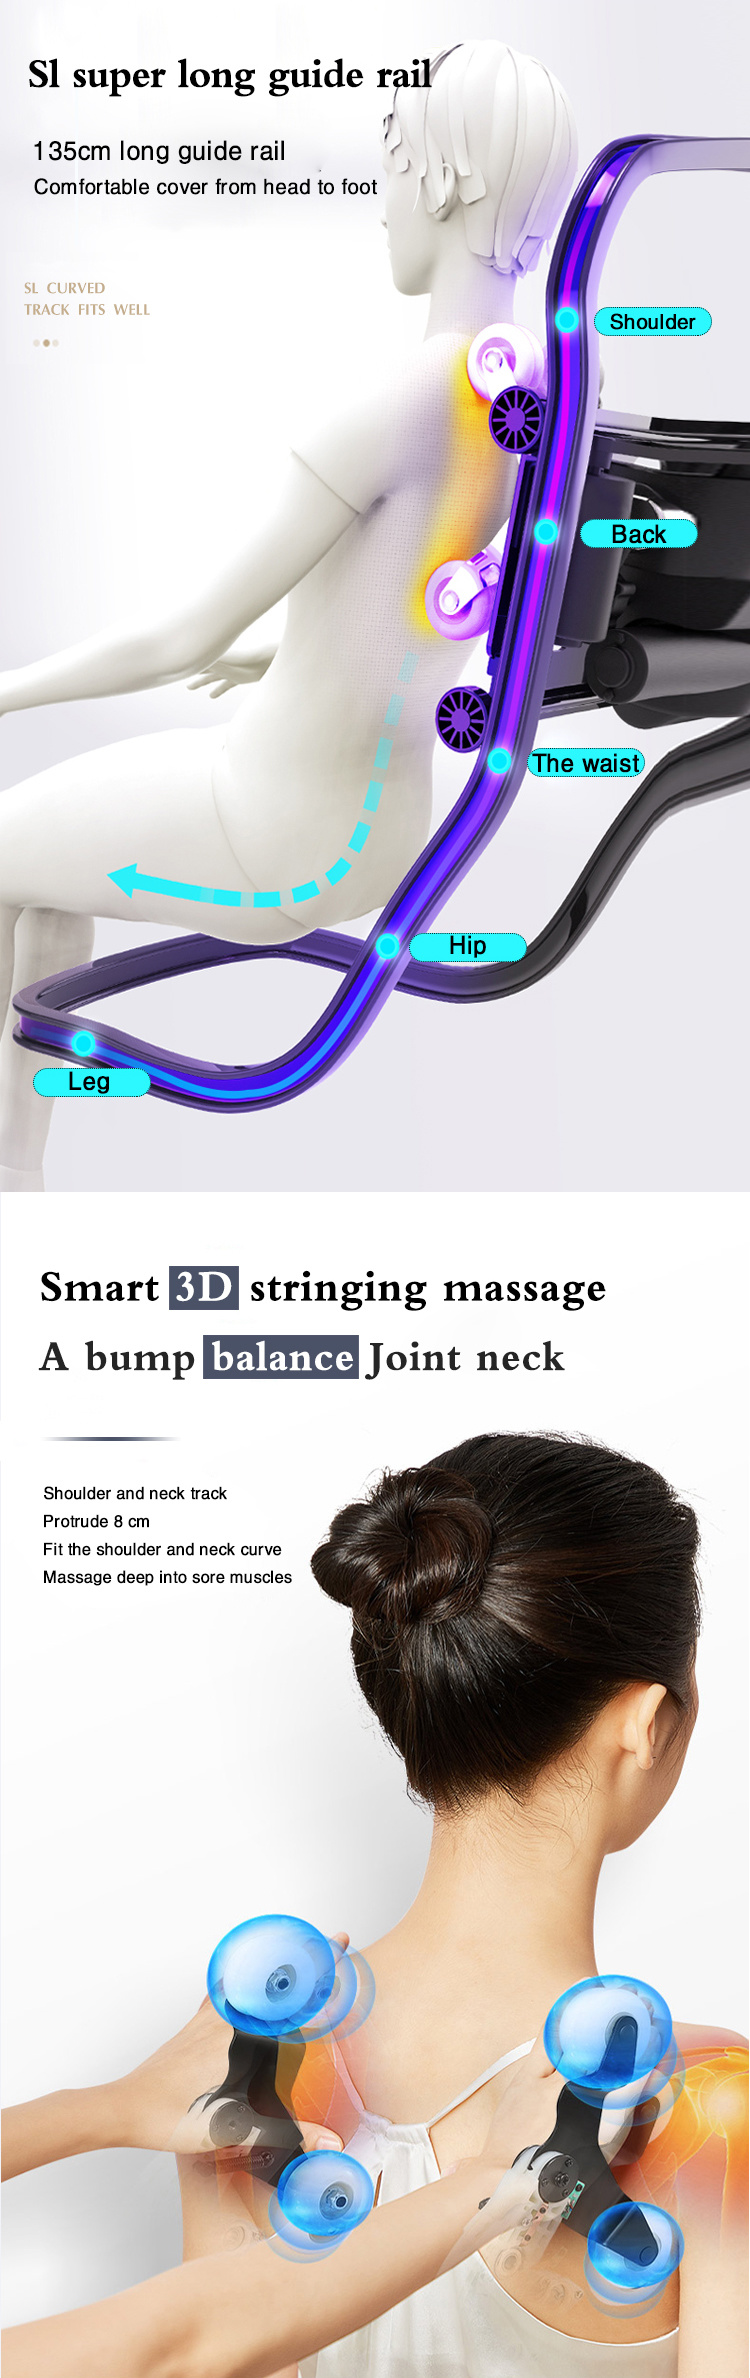 New Intelligent Luxurious Massage Chair for Back Massage